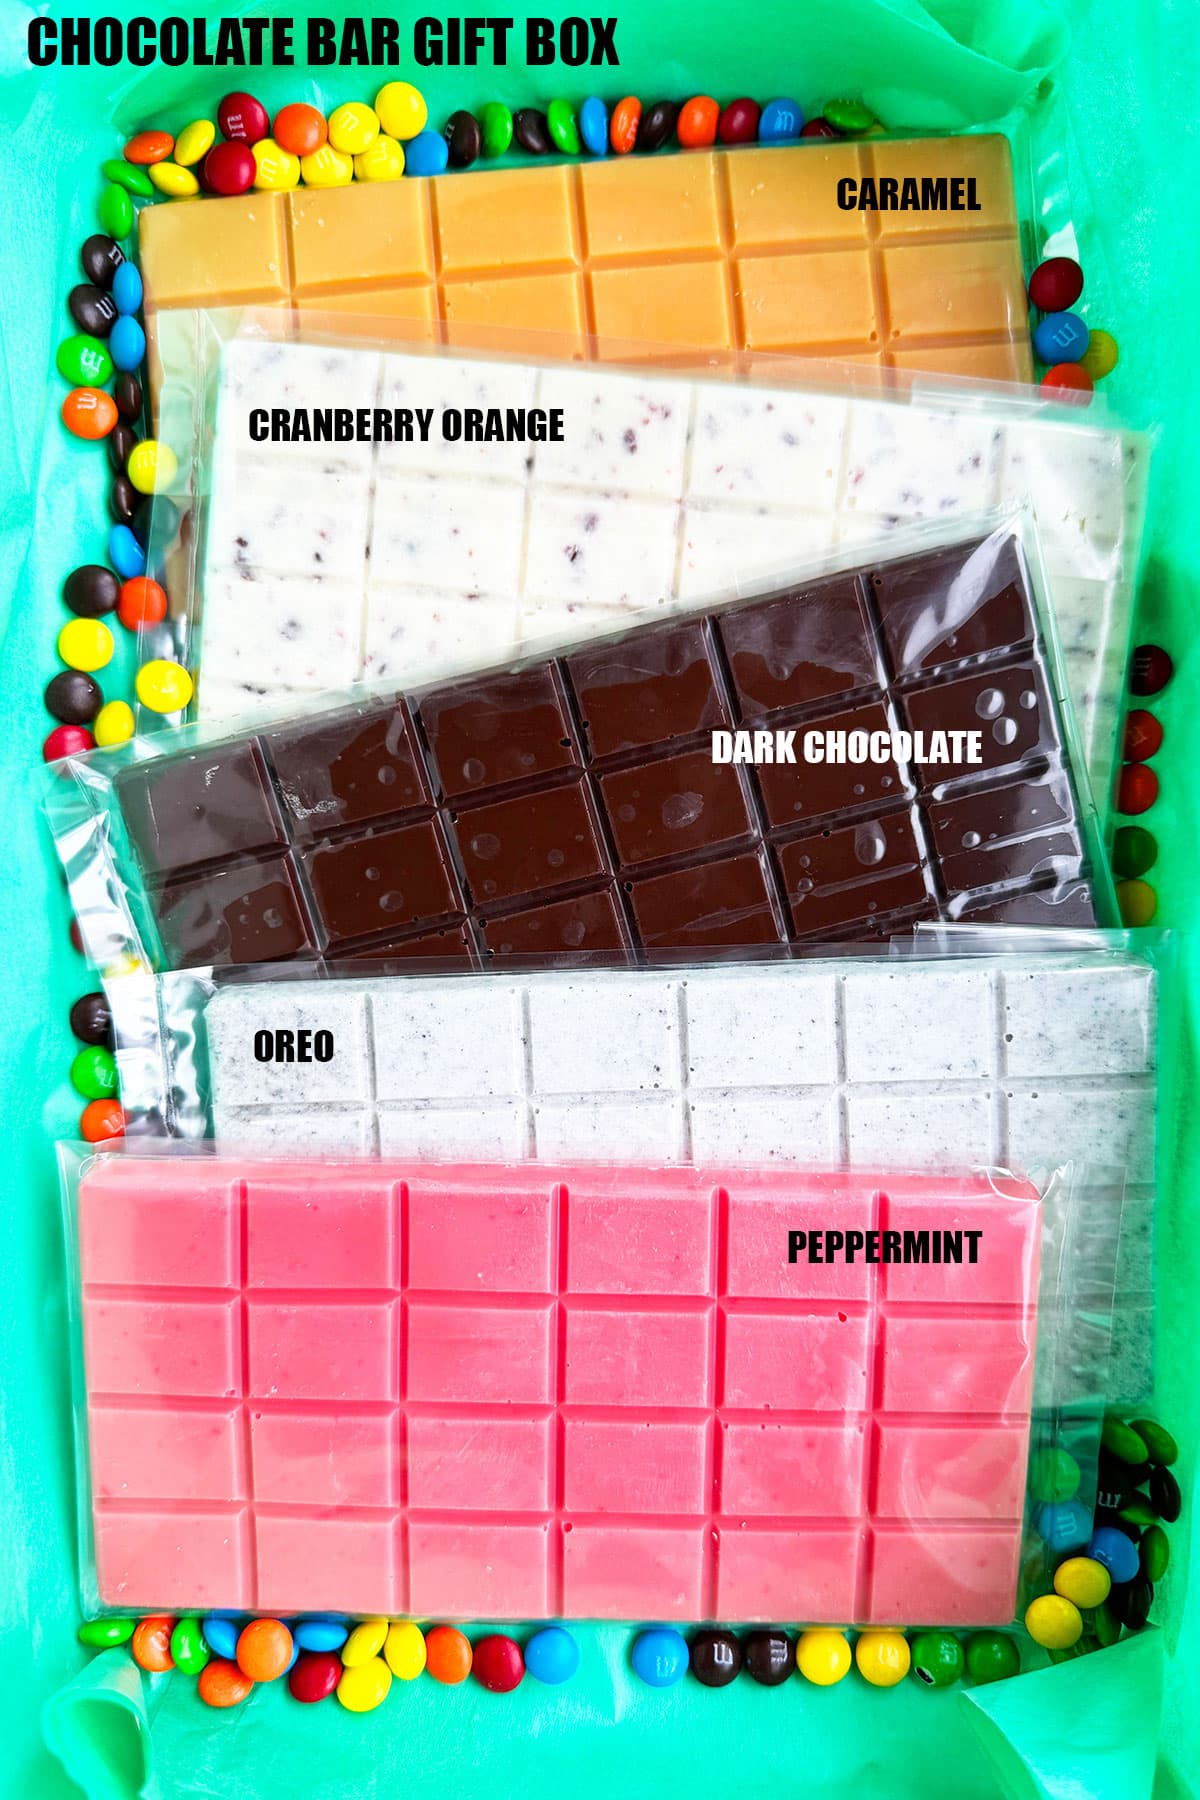 Buy/Send Handmade Chocolates Wishes Online- FNP